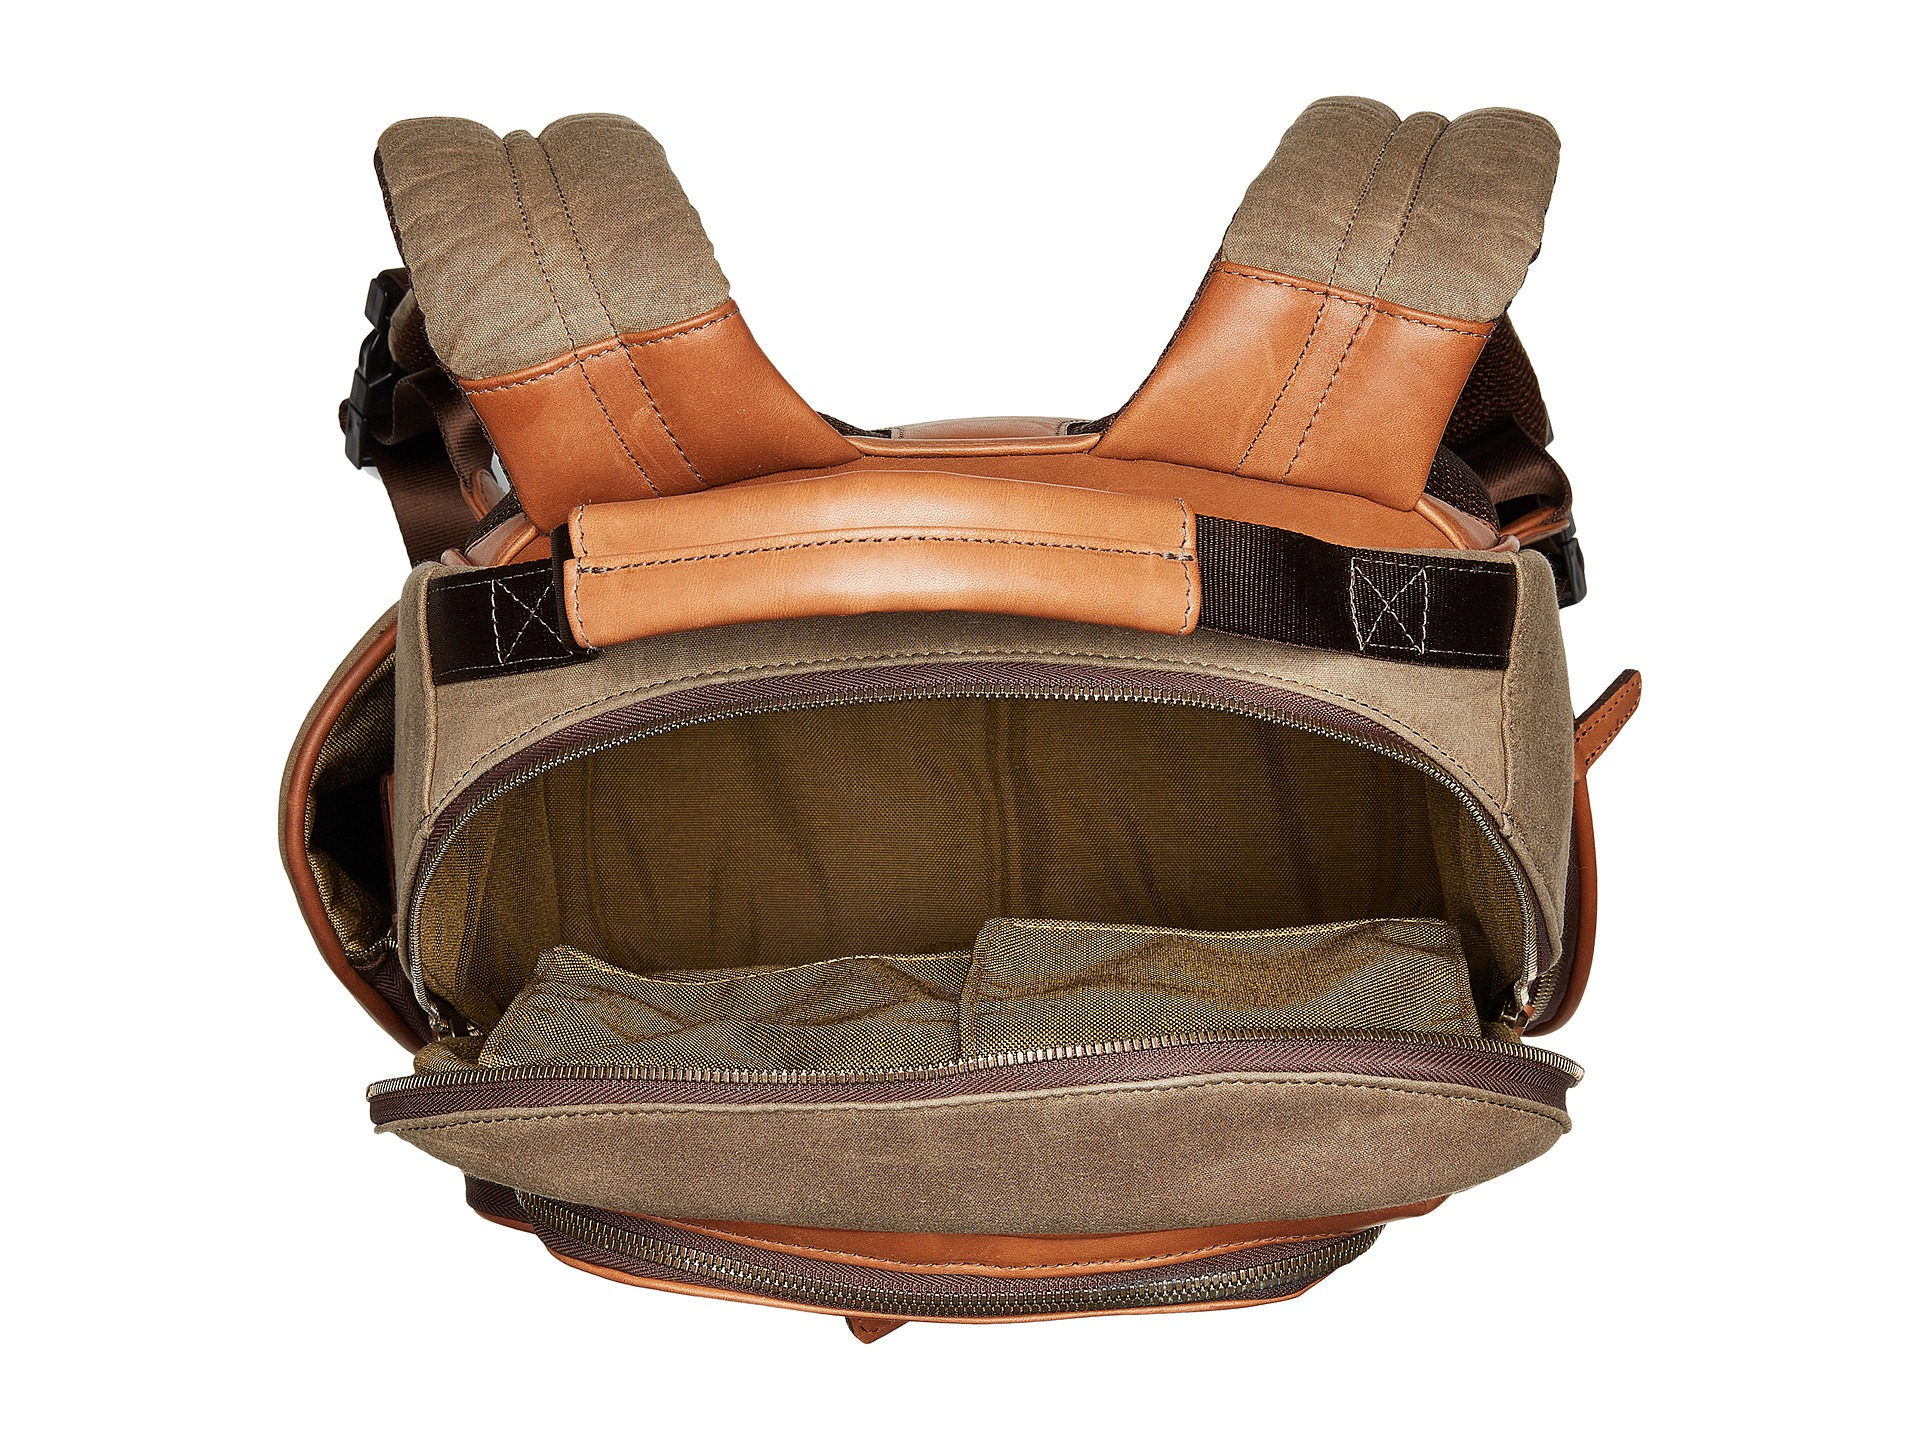 Lyst - Allen Edmonds Canvas/leather Backpack in Brown for Men